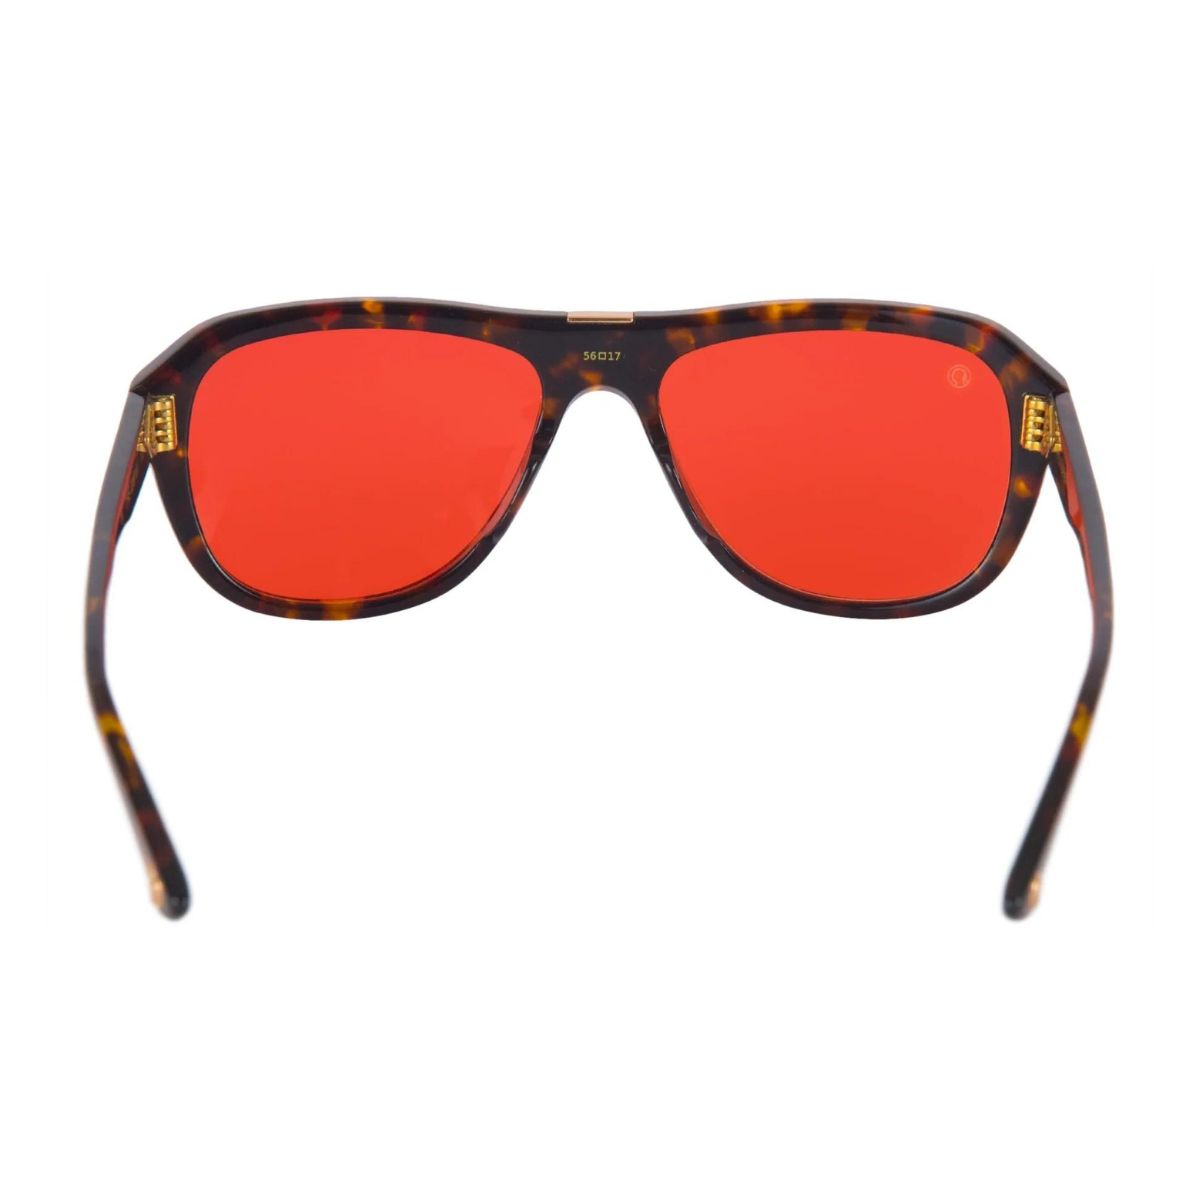 "Stylish The Monk Philosopher C2 Square Frame UV Protection Sunglasses At Optorium"